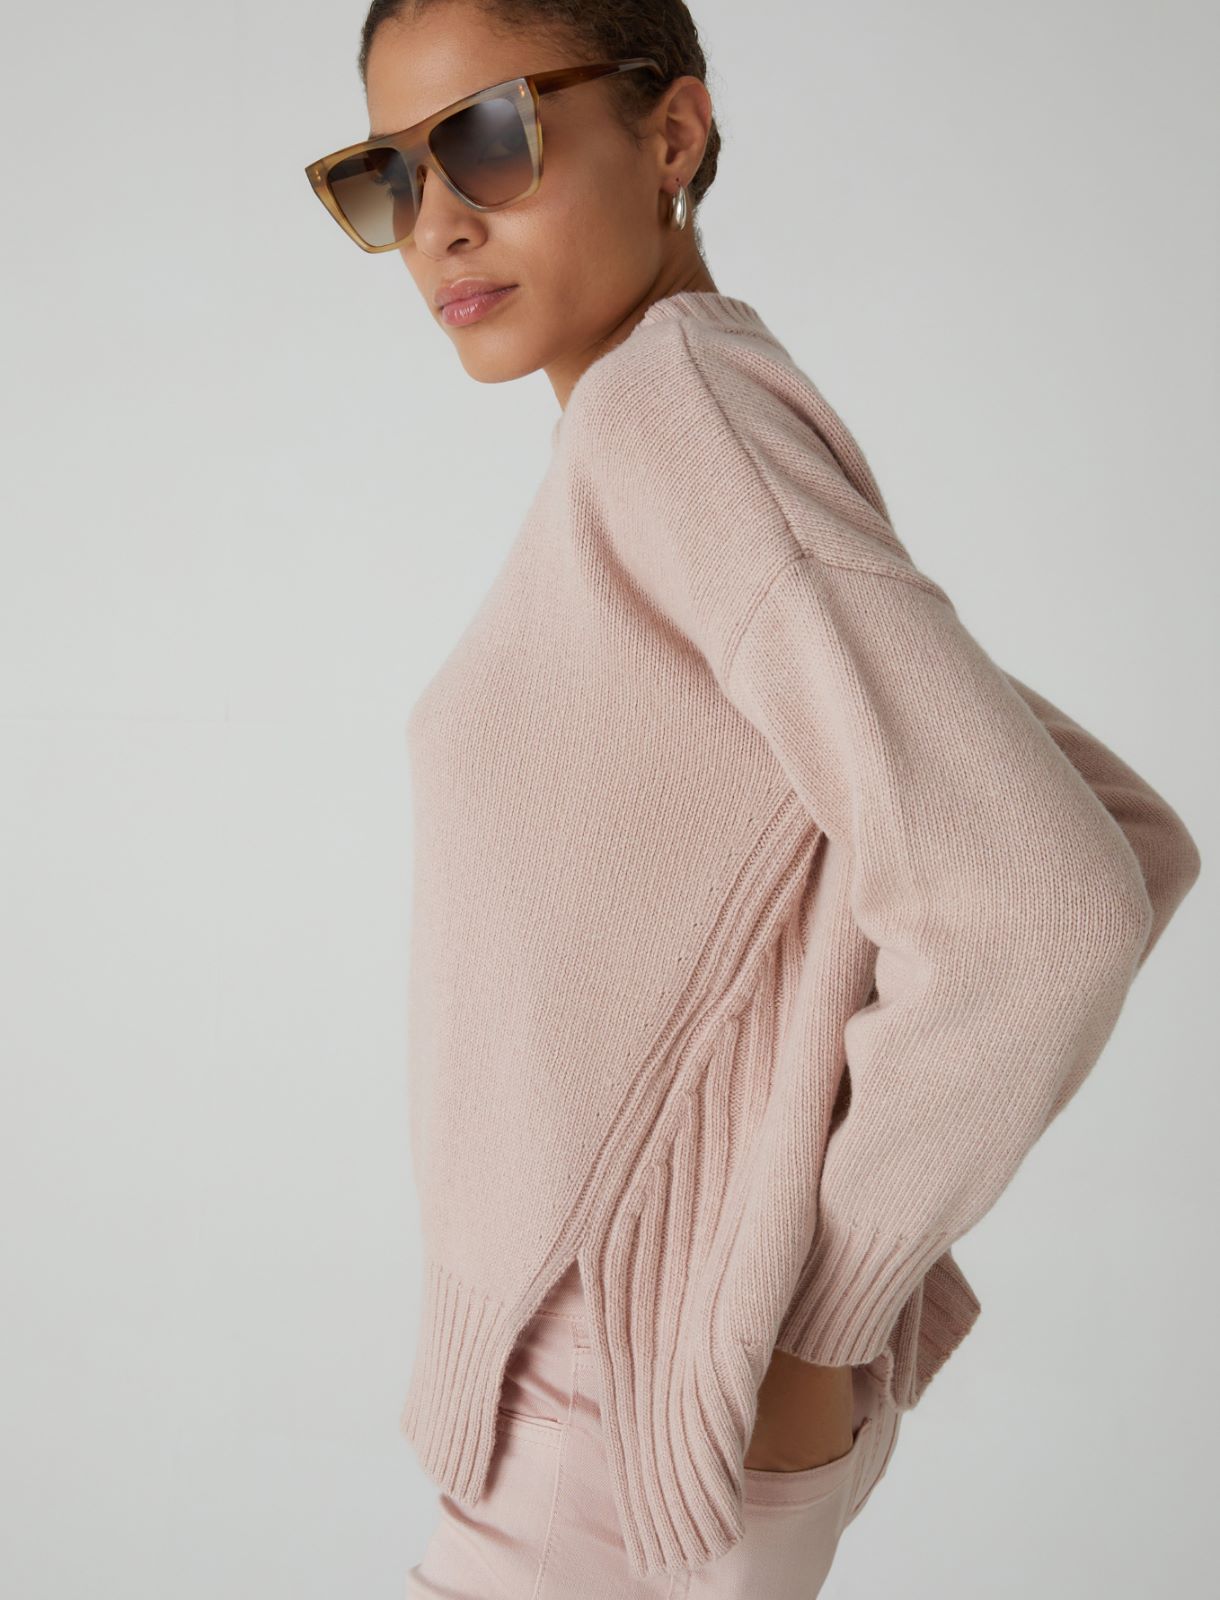 Cashmere-blend sweater - Nudo - Marella - 4